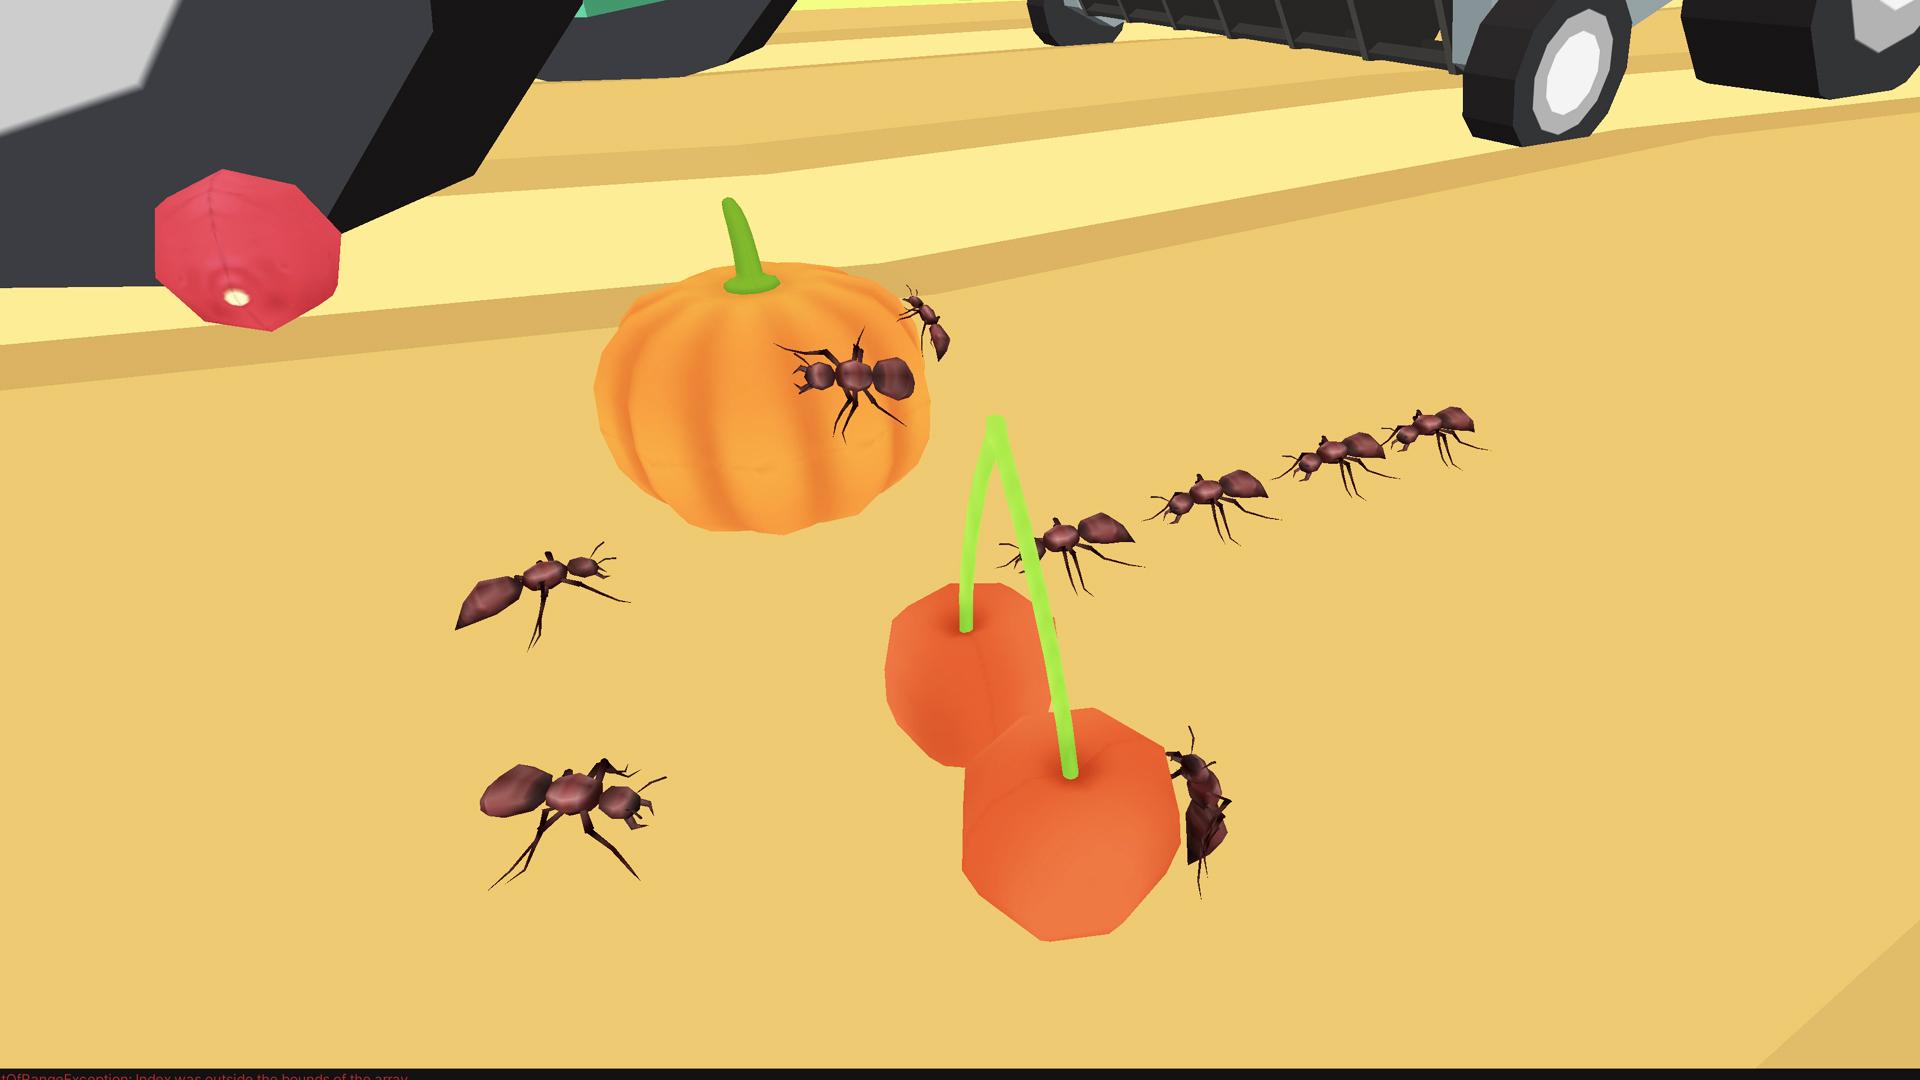 Игра симулятор муравья. Ant Colony игра. Квест муравей игра. The Ants игра на андроид. Игра про муравьев на андроид.